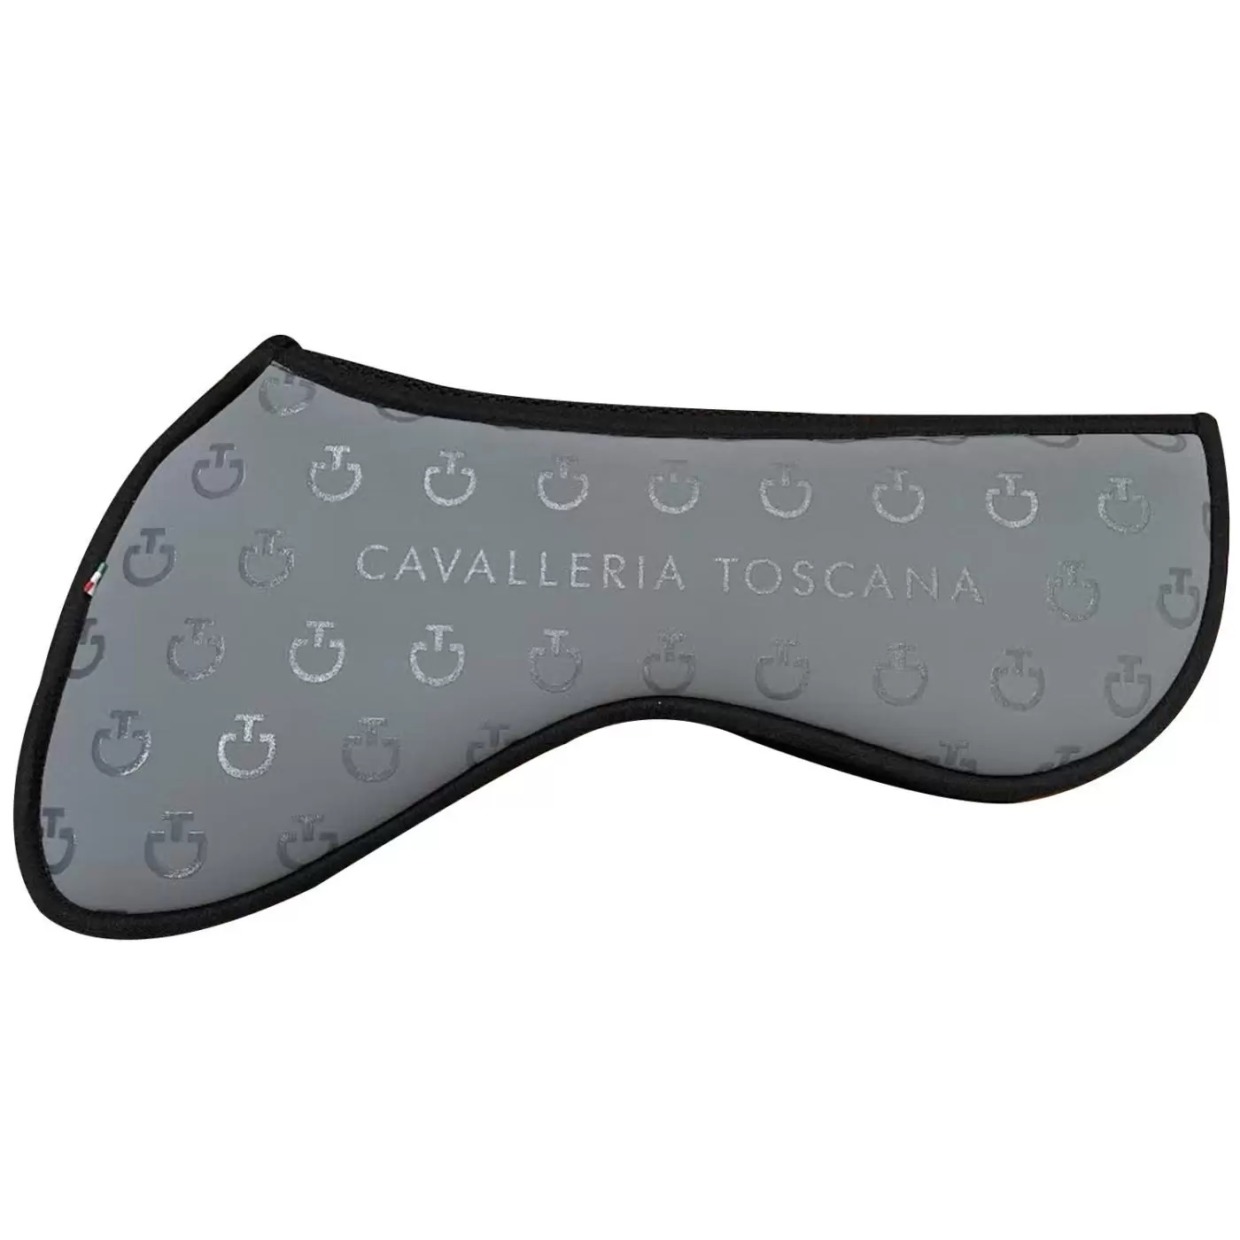 Cavalleria Toscana (カバレリアトスカーナ) メモリーハーフパッド